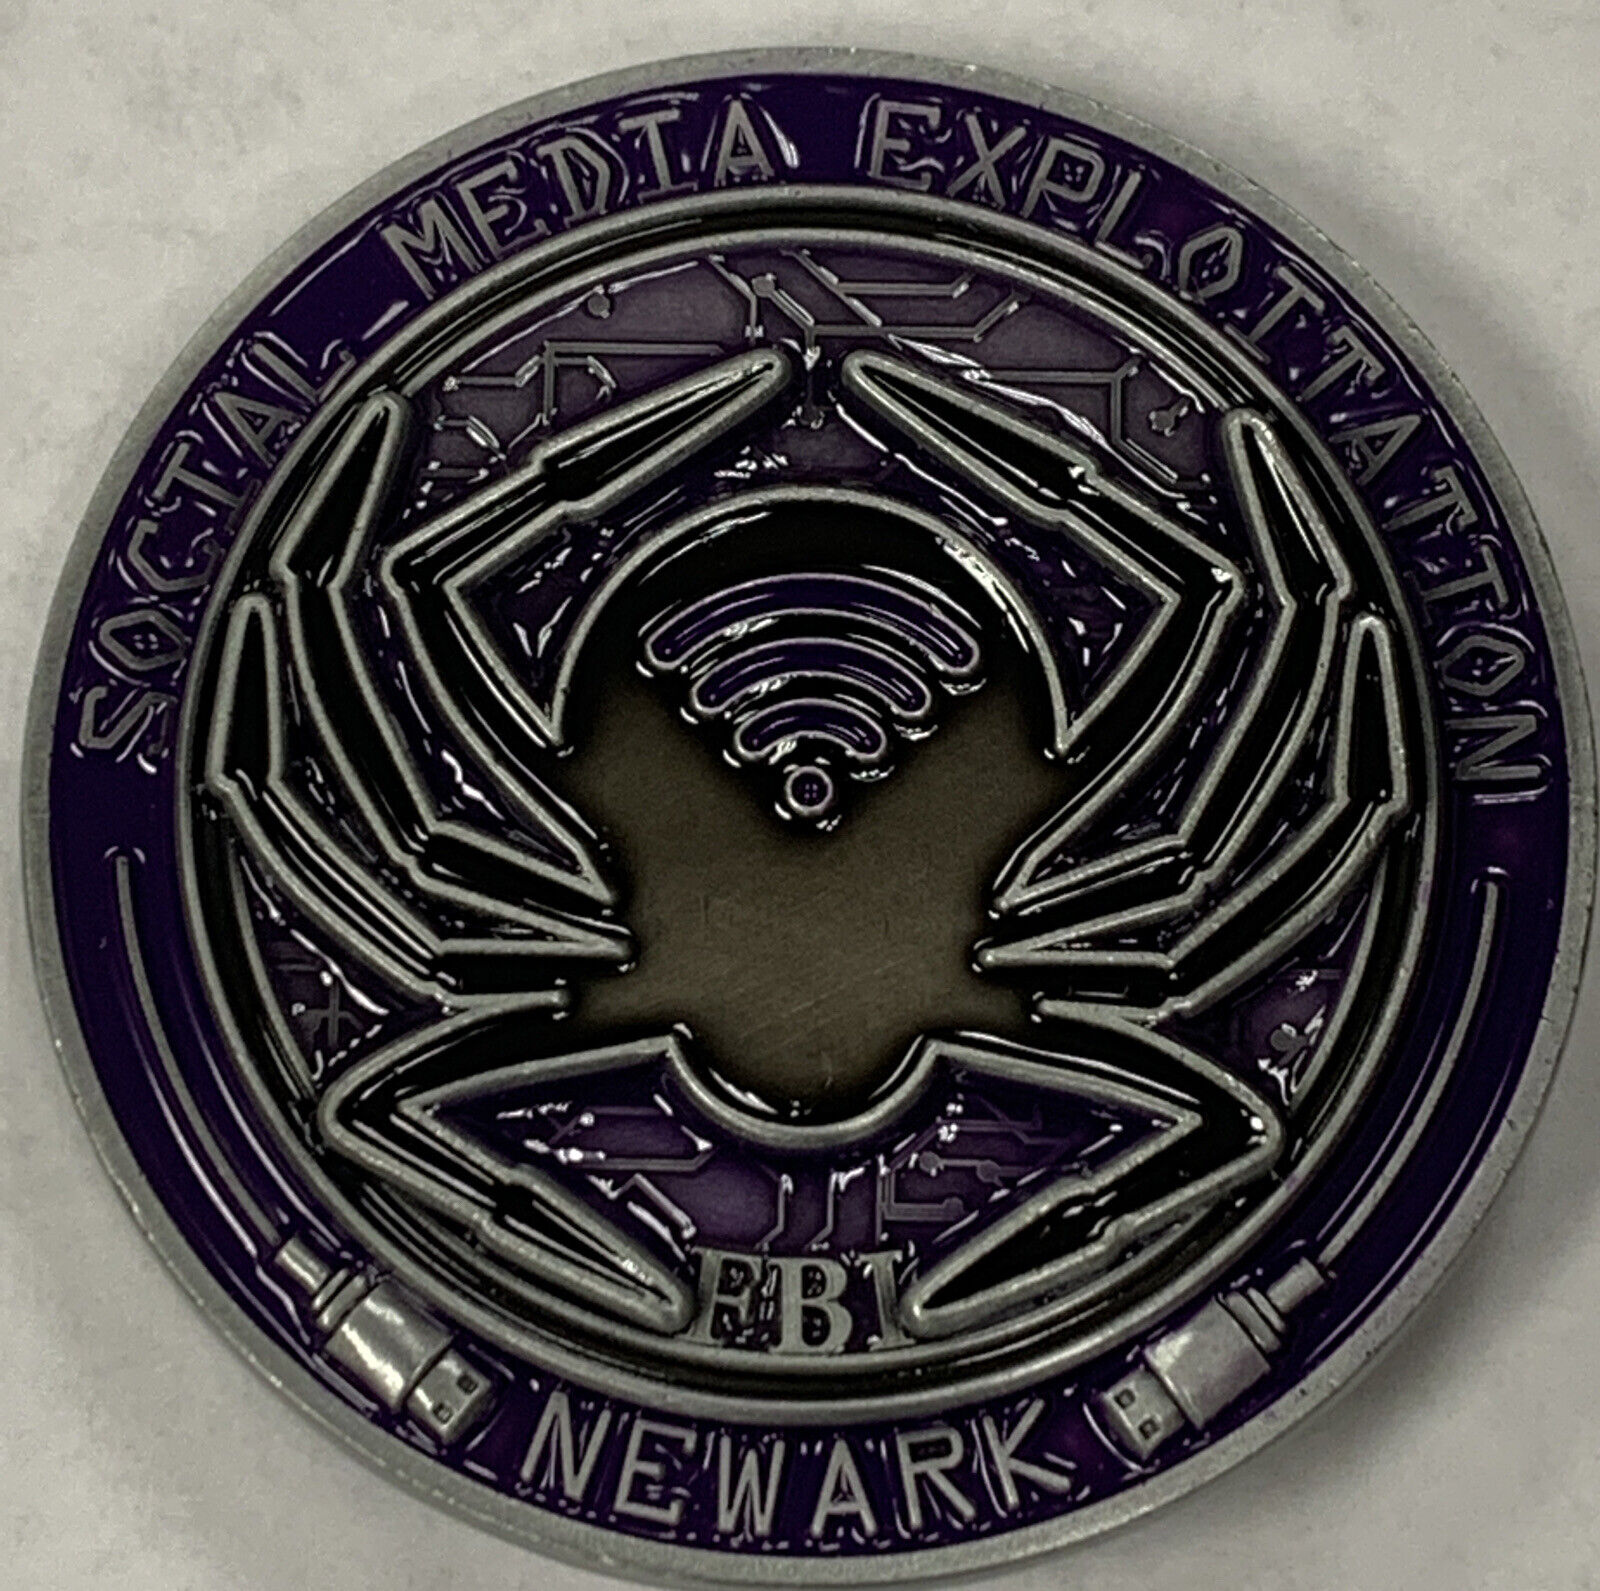 FBI Newark Division Social Media Exploitation Challenge Coin